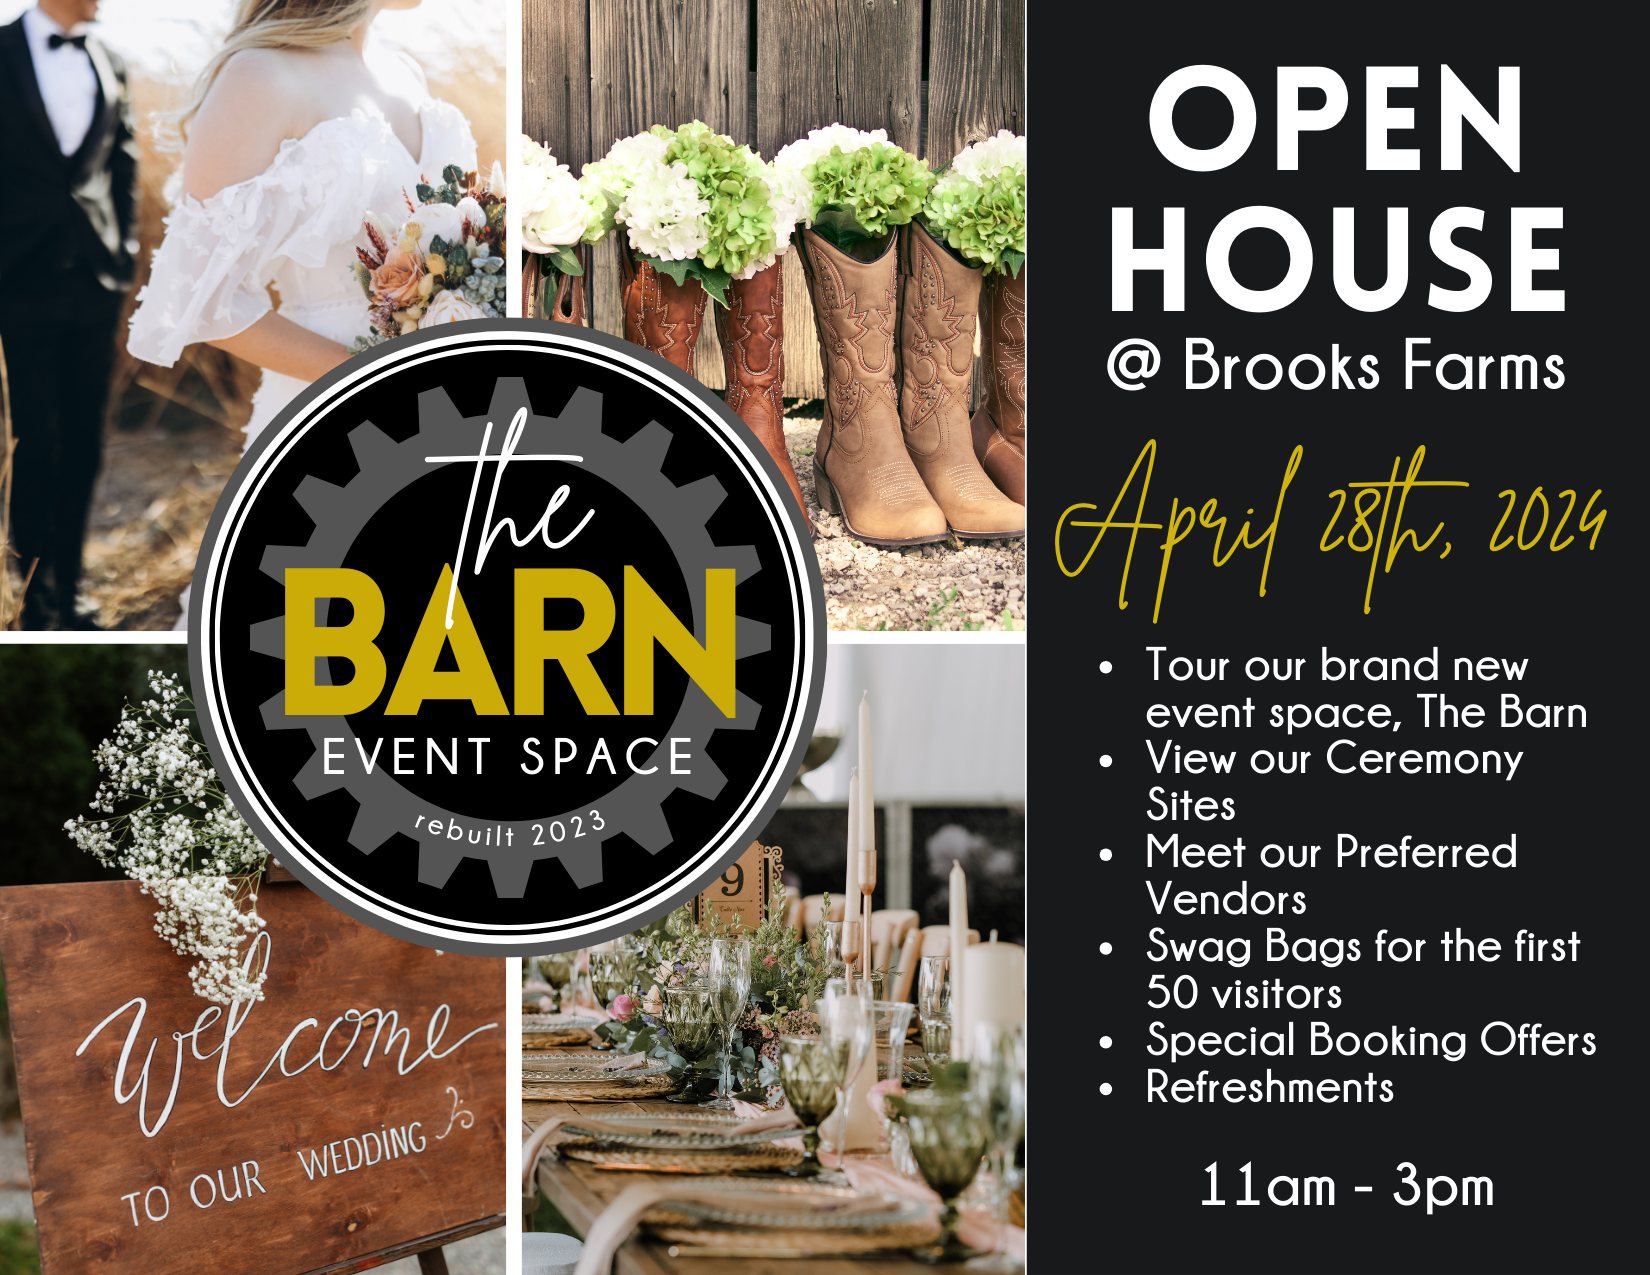 Brooks Farm the Barn Event Space